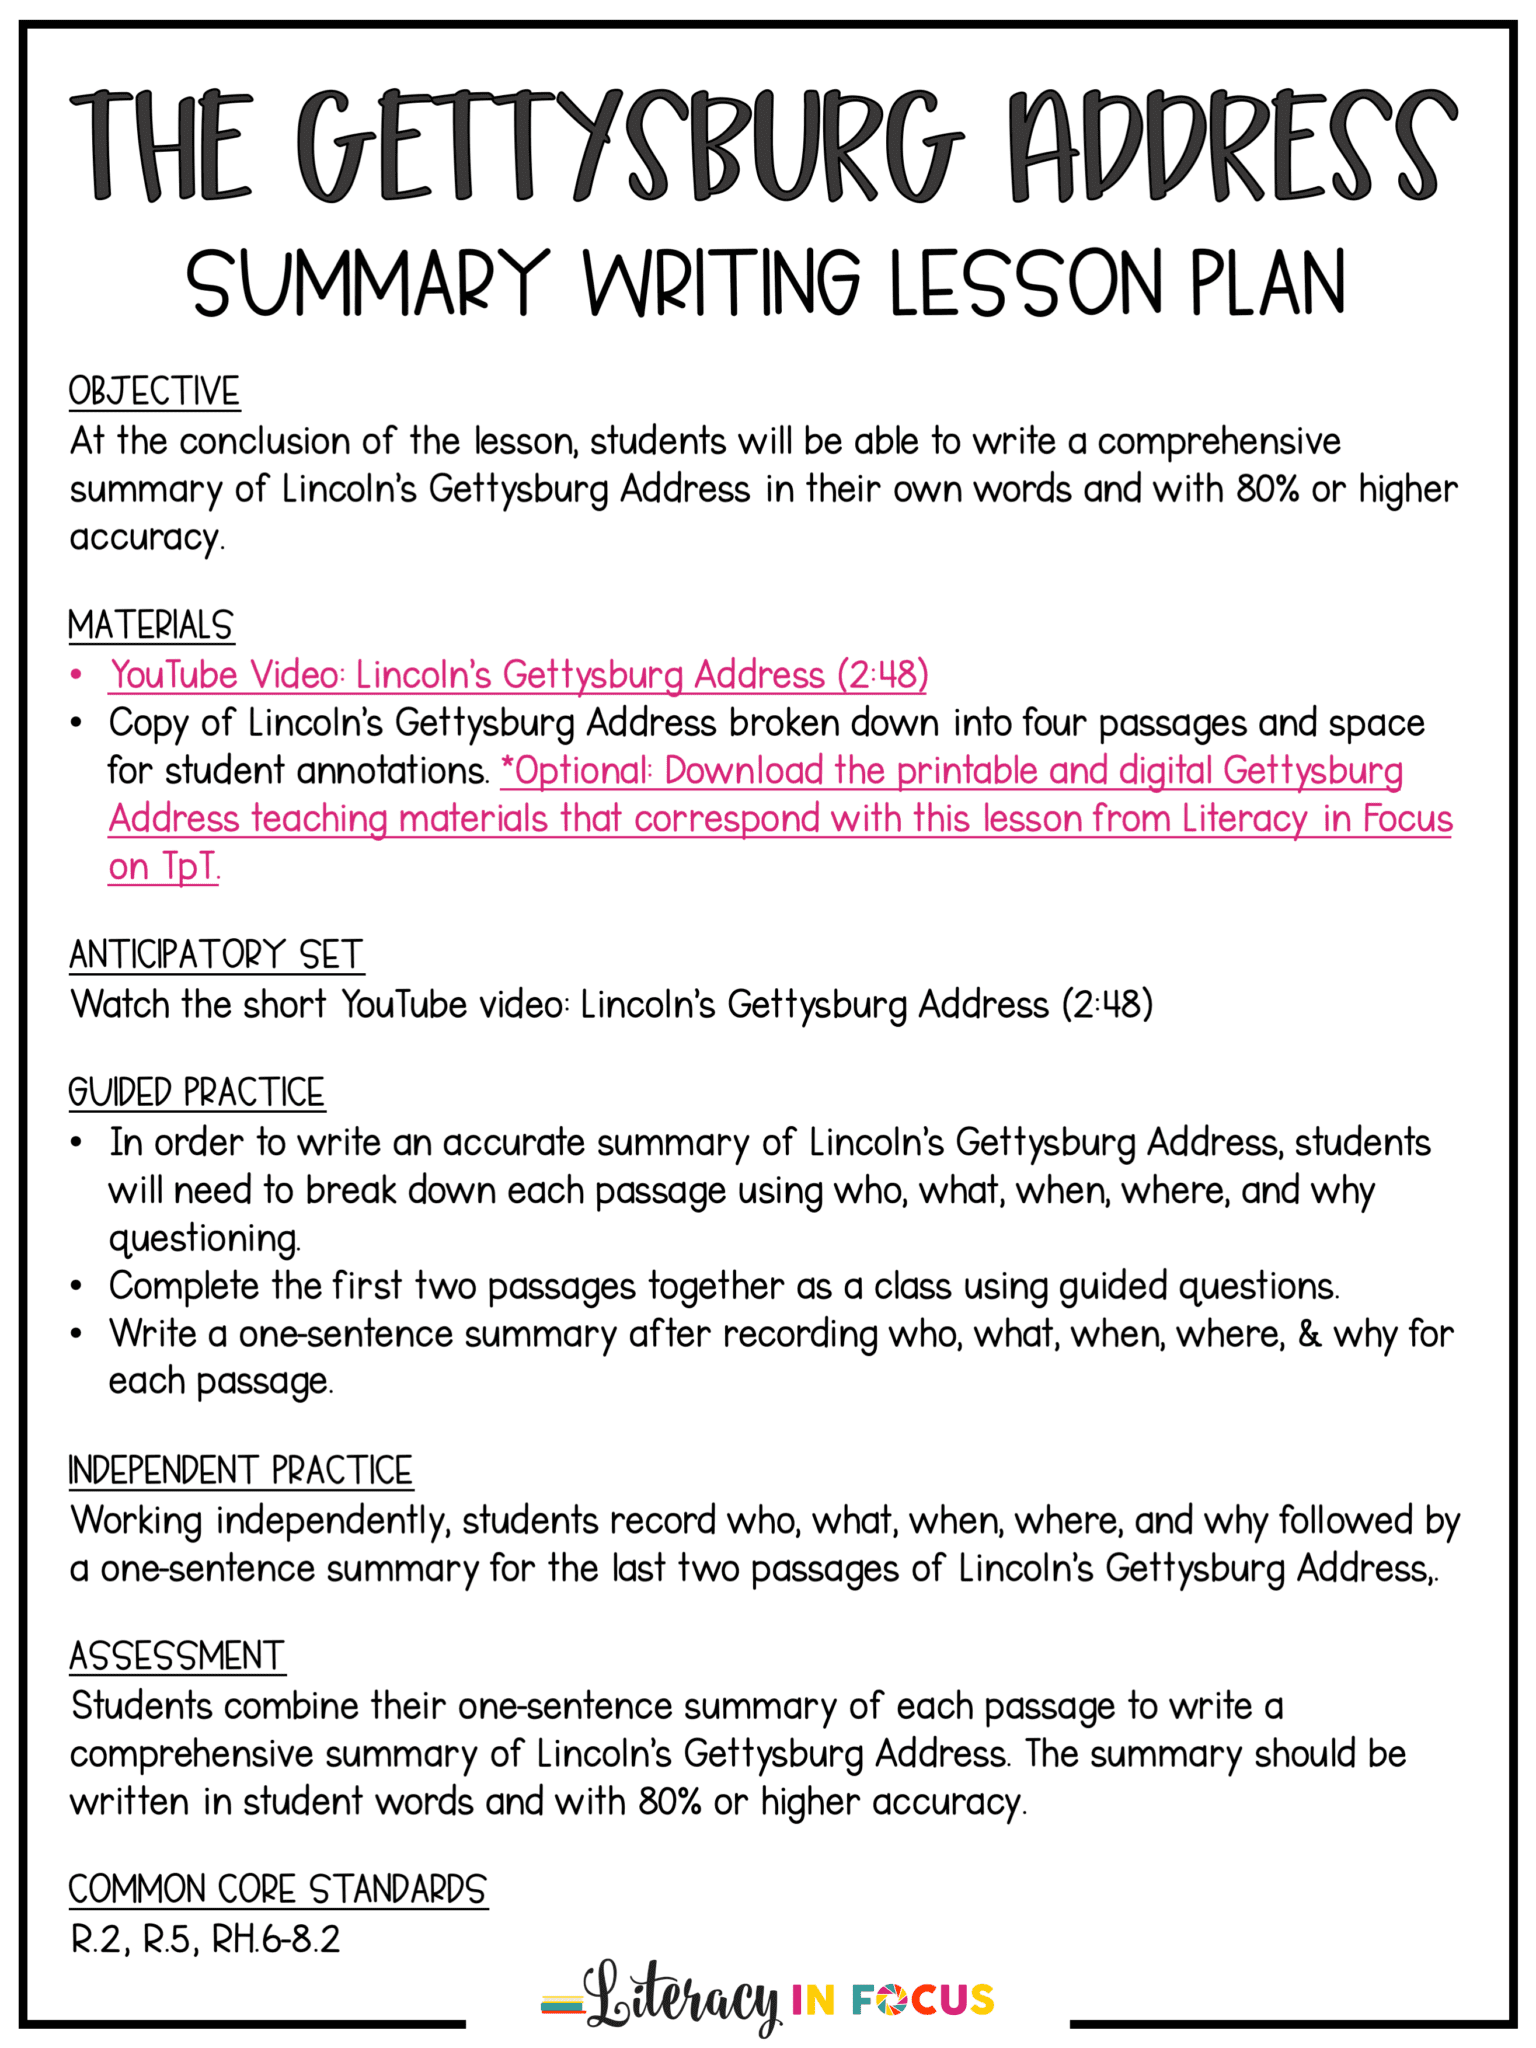 Gettysburg Address Summary Writing Lesson Plan